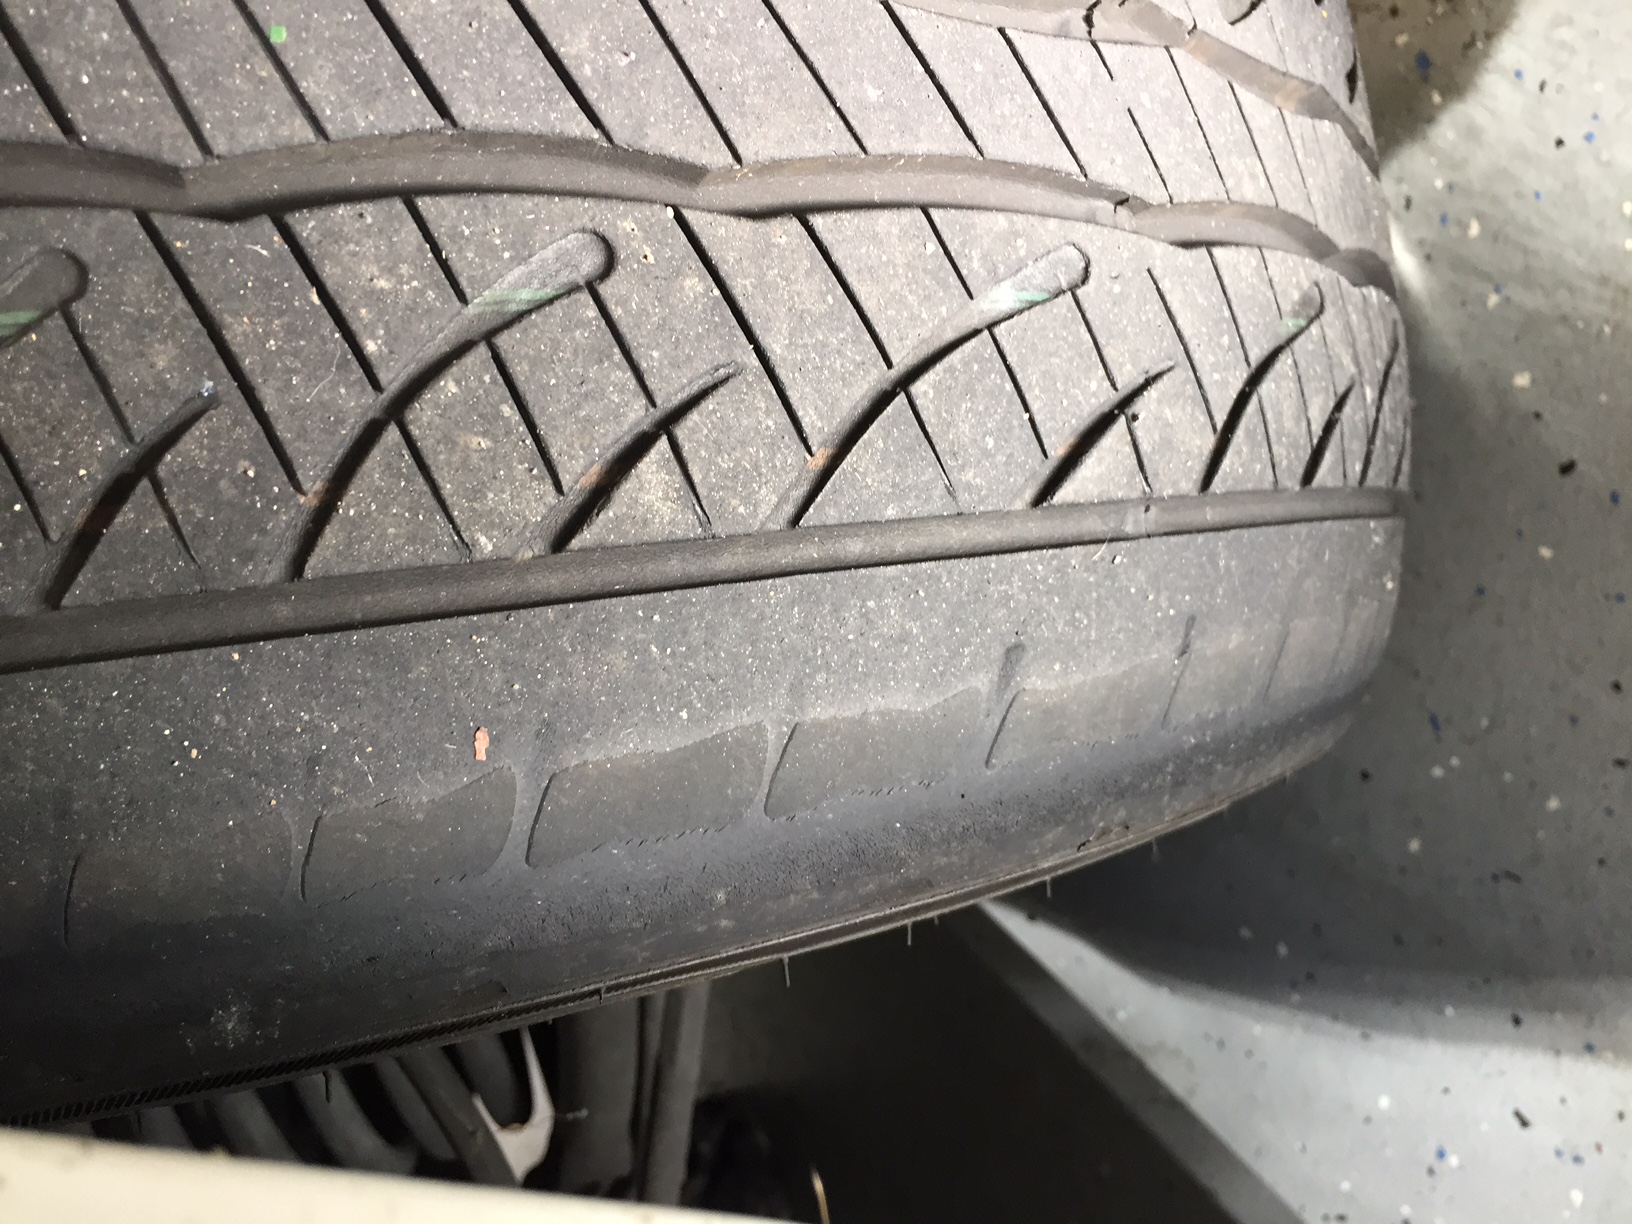 Unusual front inner tire wear -  Forums